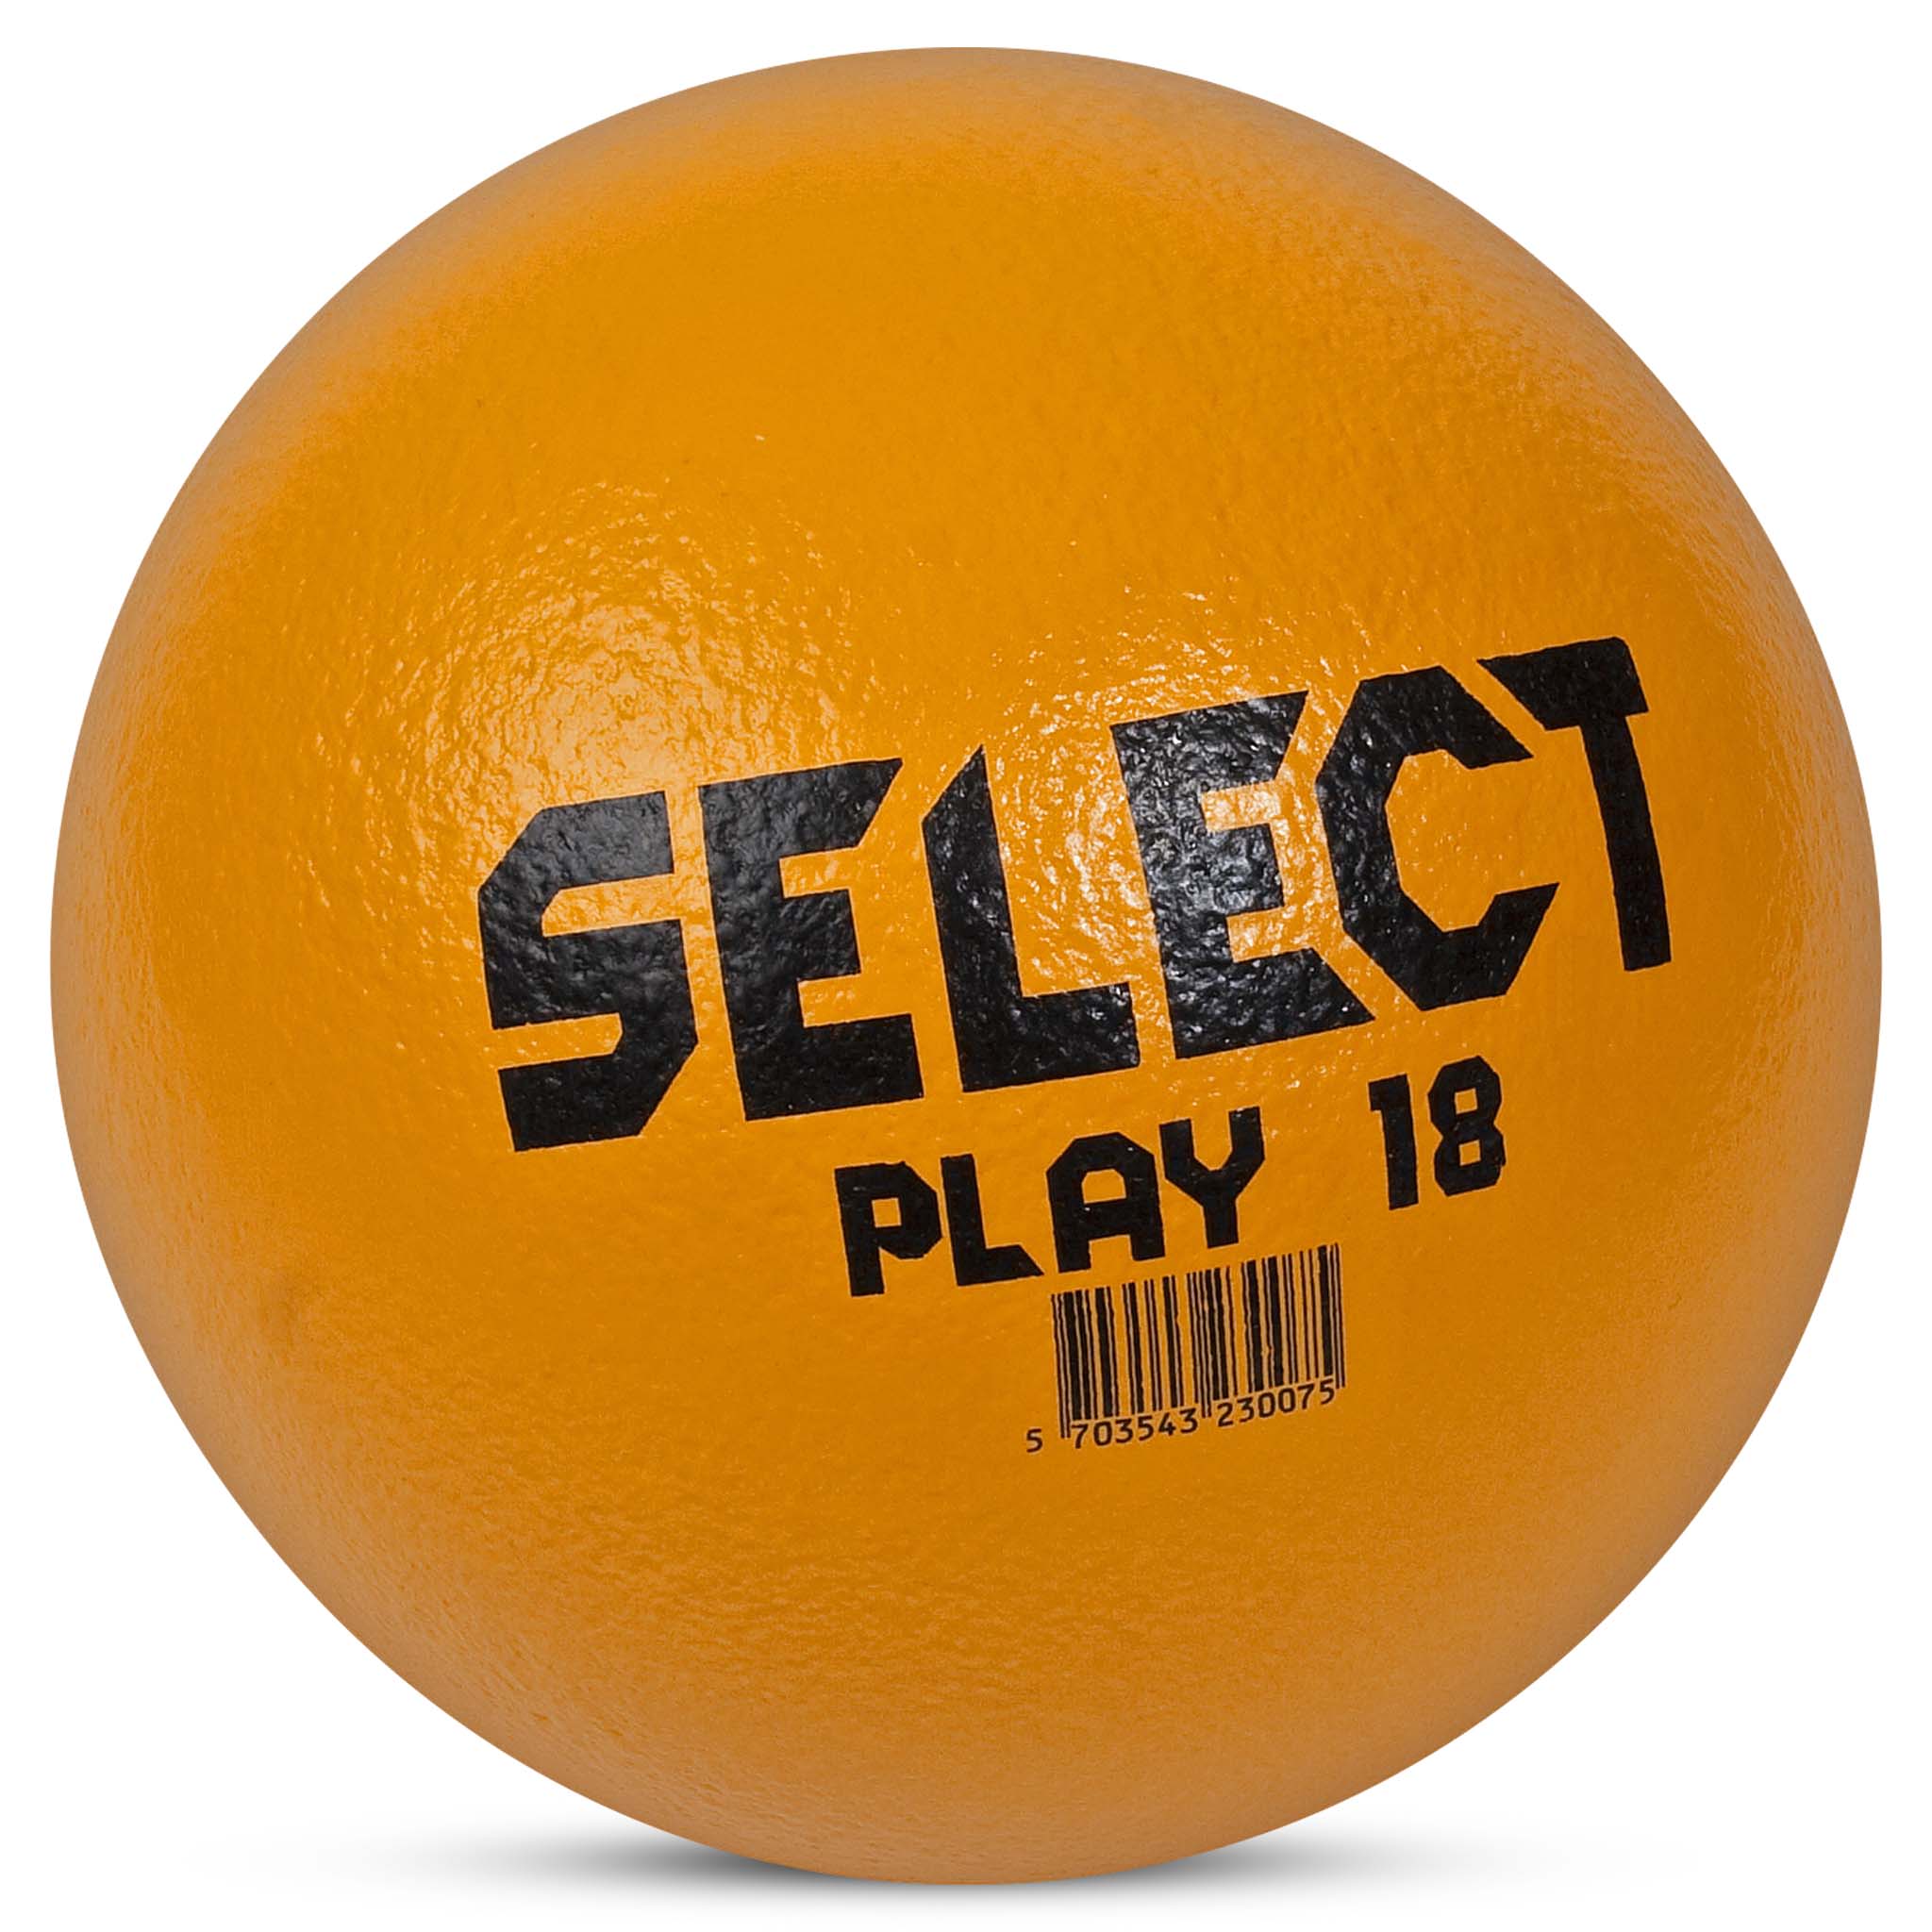 Foam ball - with skin Play 21 #colour_orange